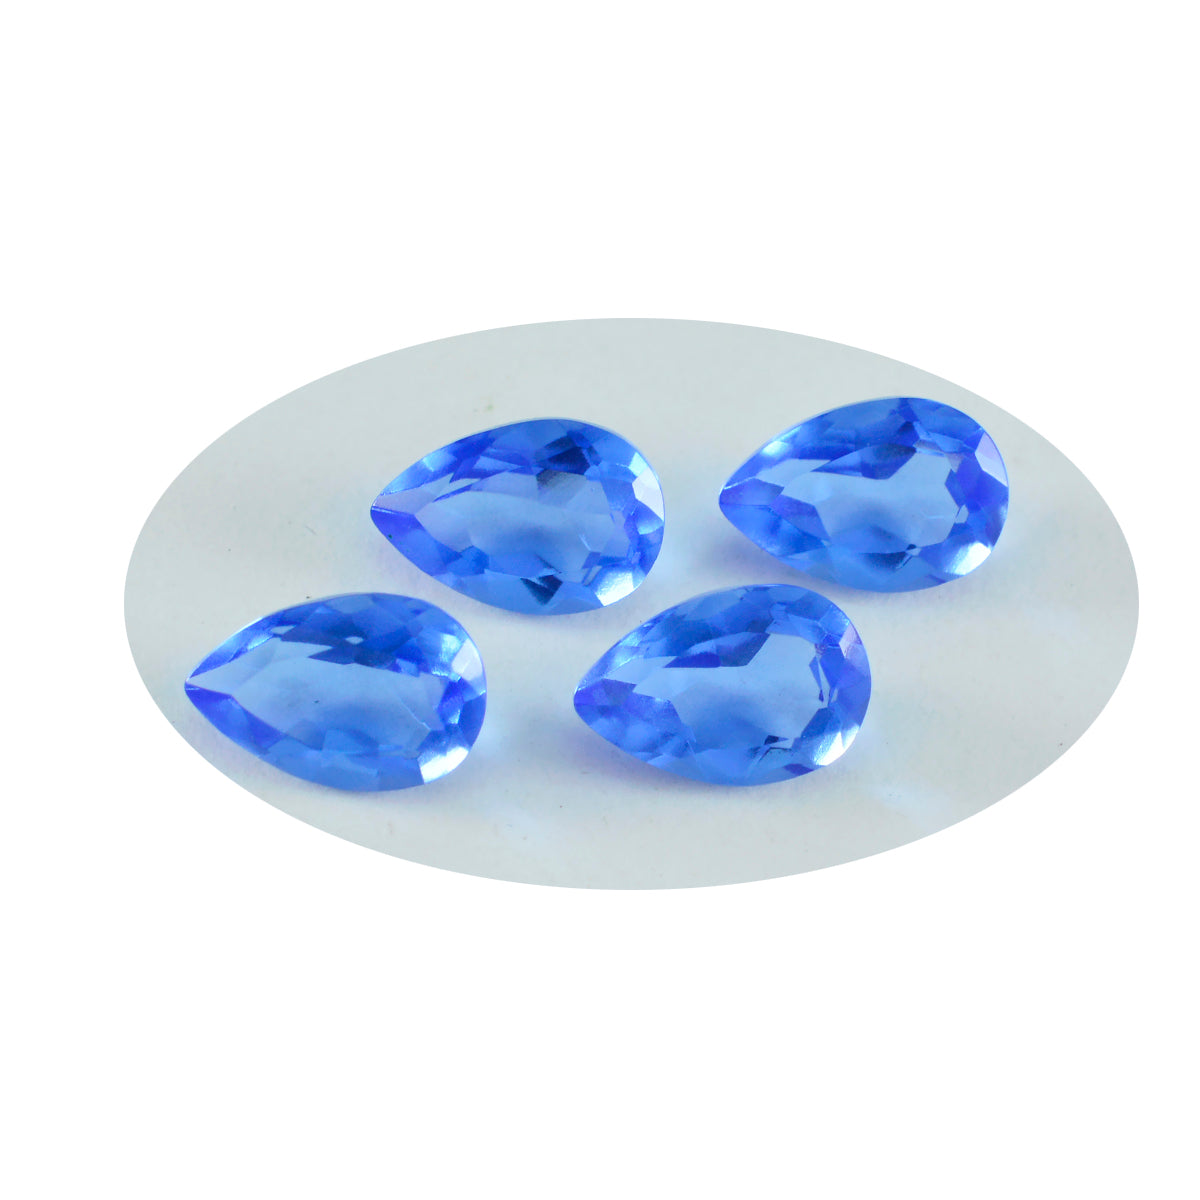 Riyogems 1 pieza zafiro azul CZ facetado 10x14 mm forma de pera gemas sueltas de calidad encantadora